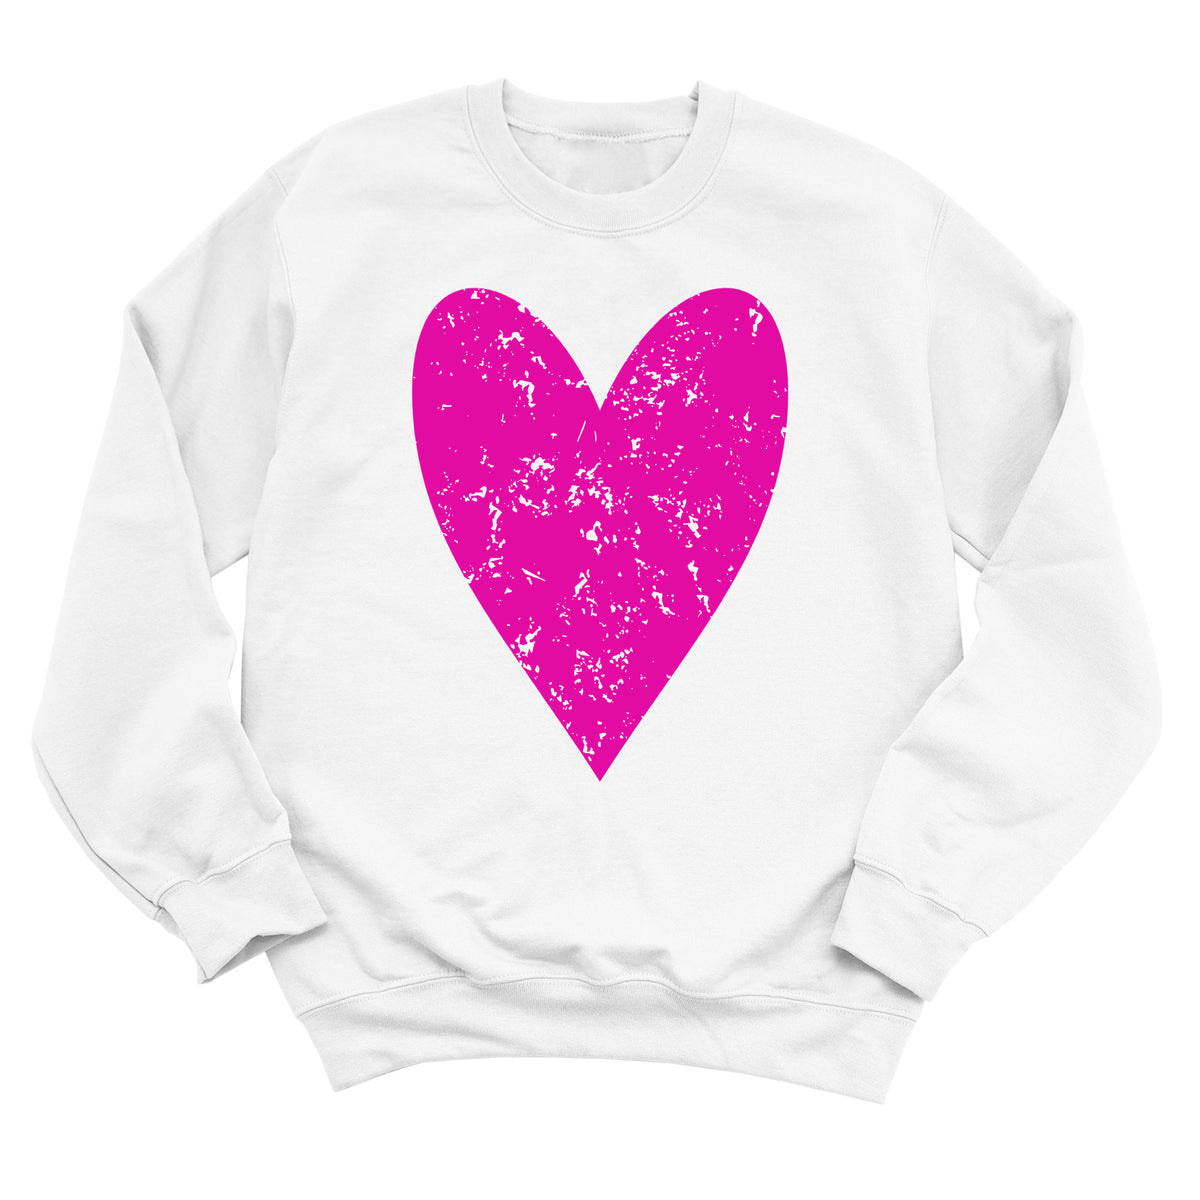 Distressed Heart Sweatshirt